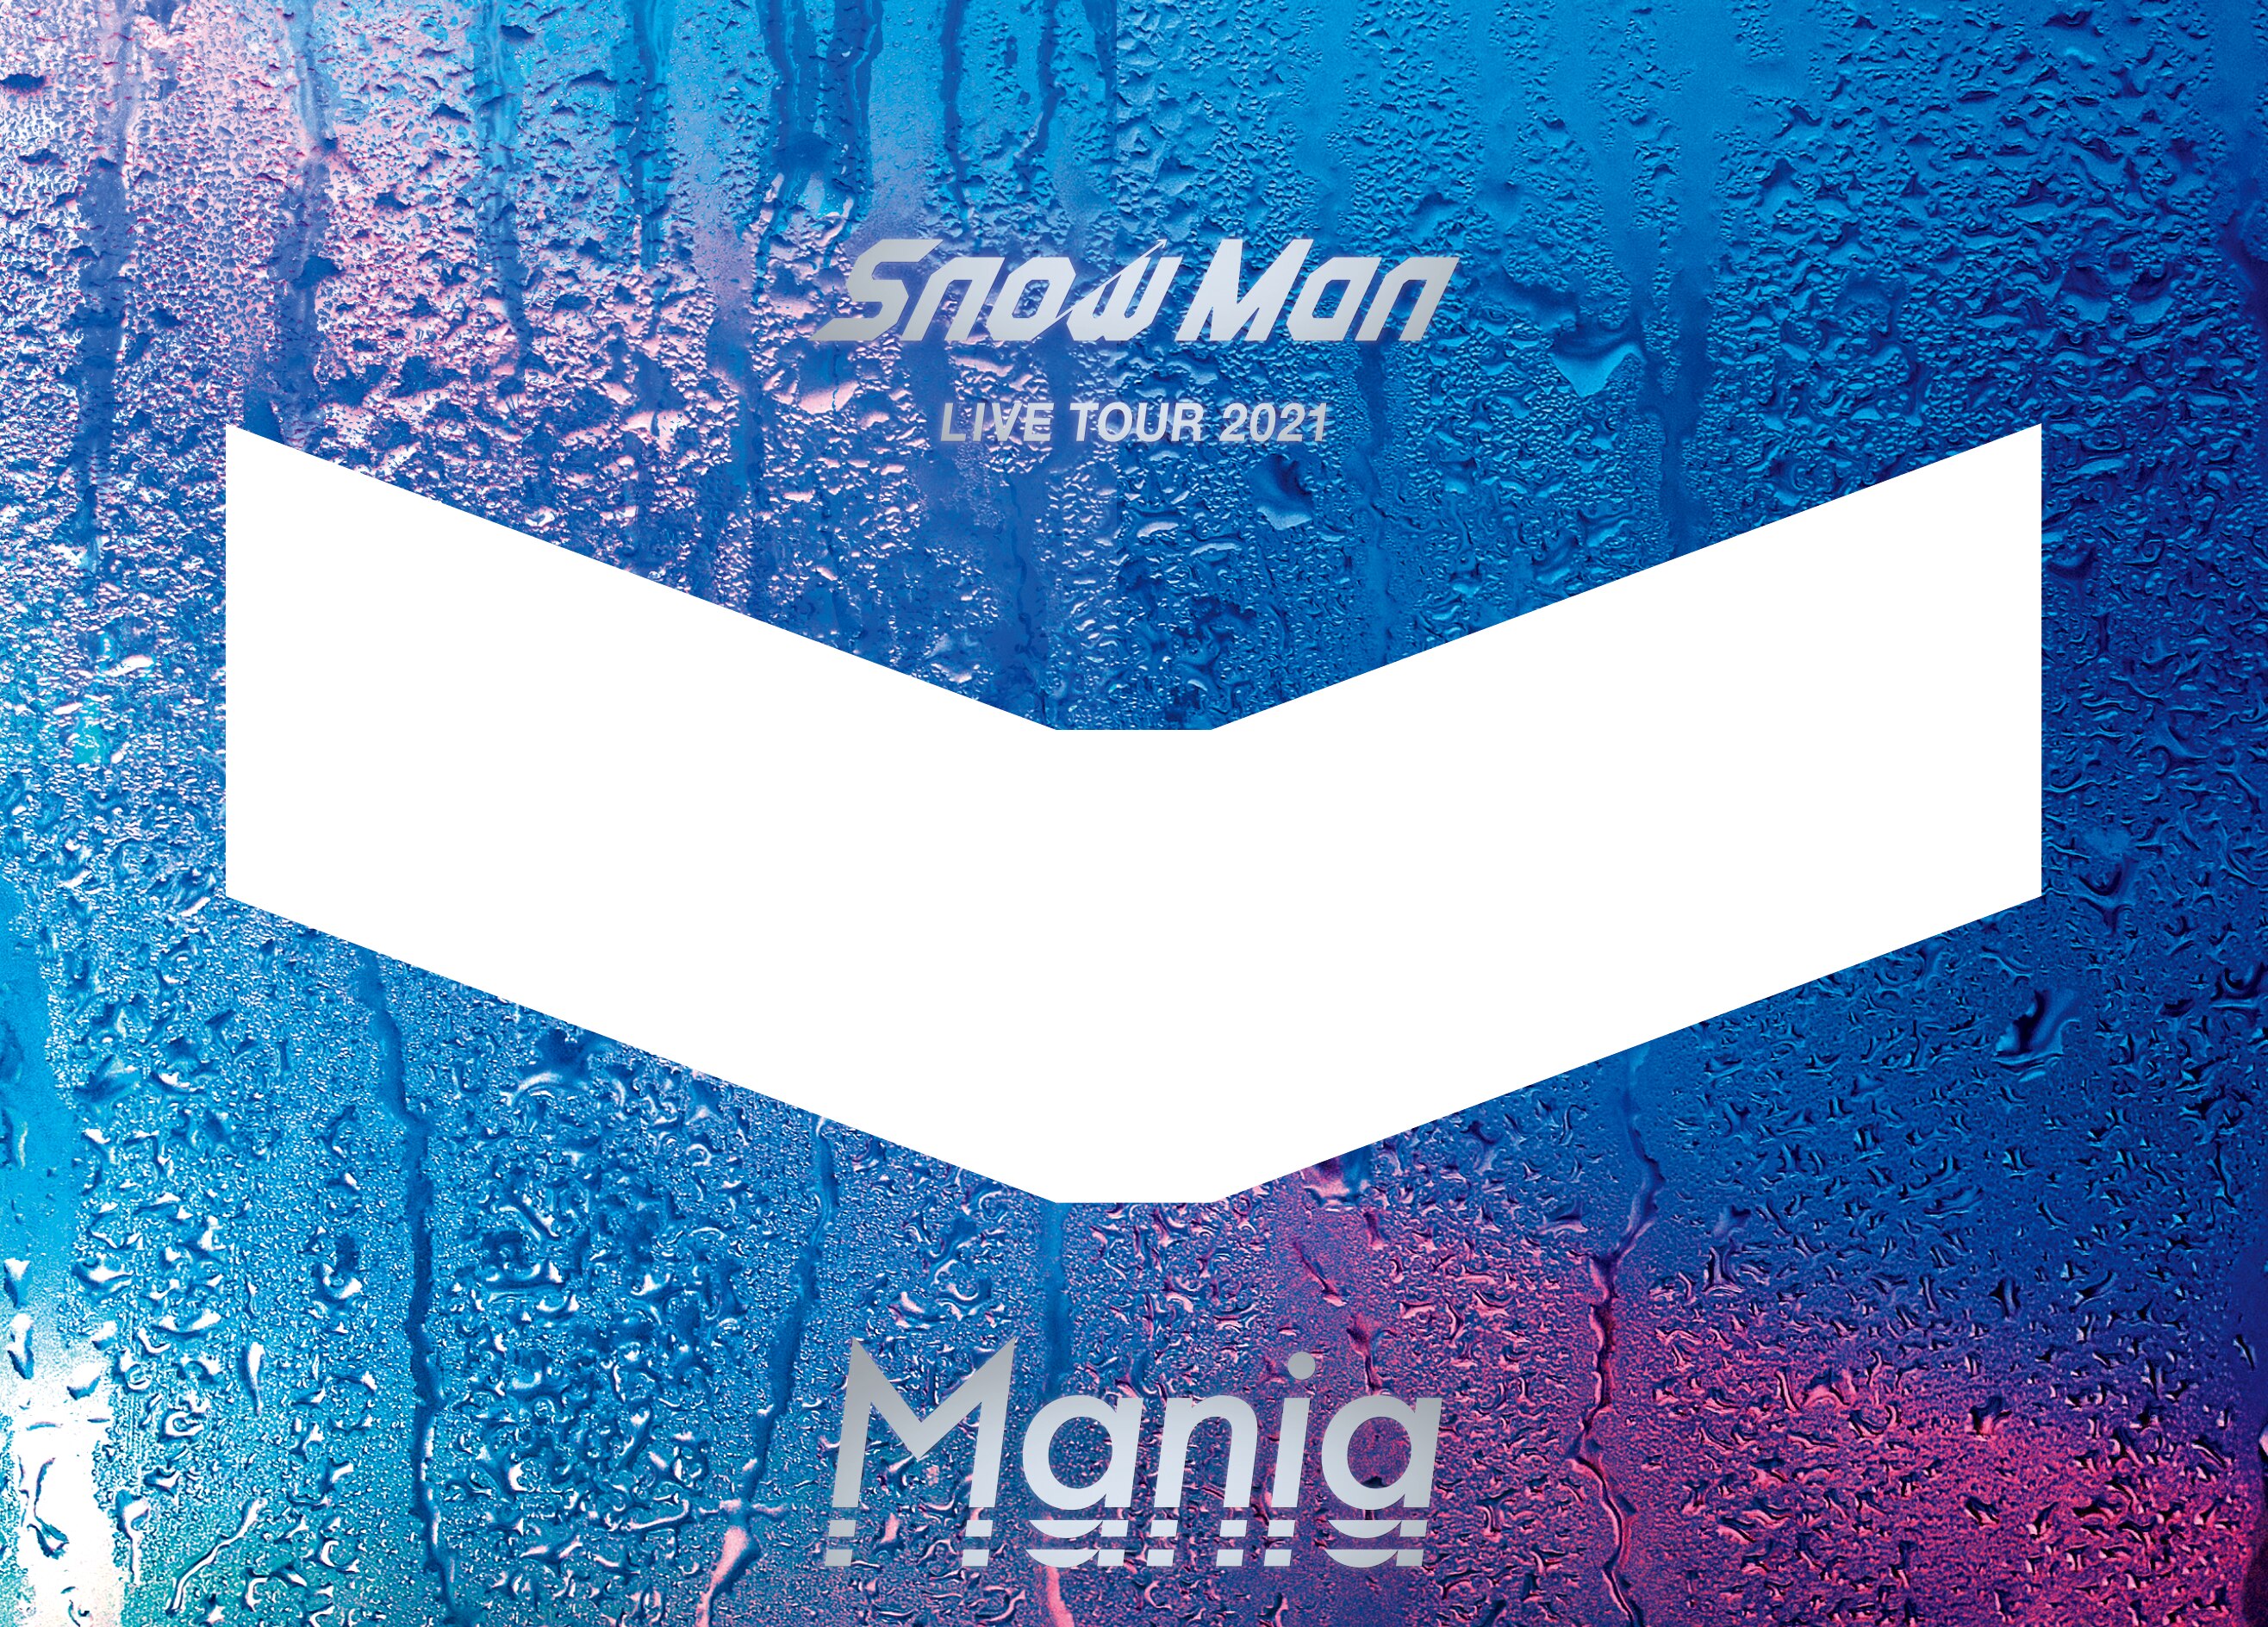 Snow Man LIVE TOUR 2021 Mania 初回盤DVD